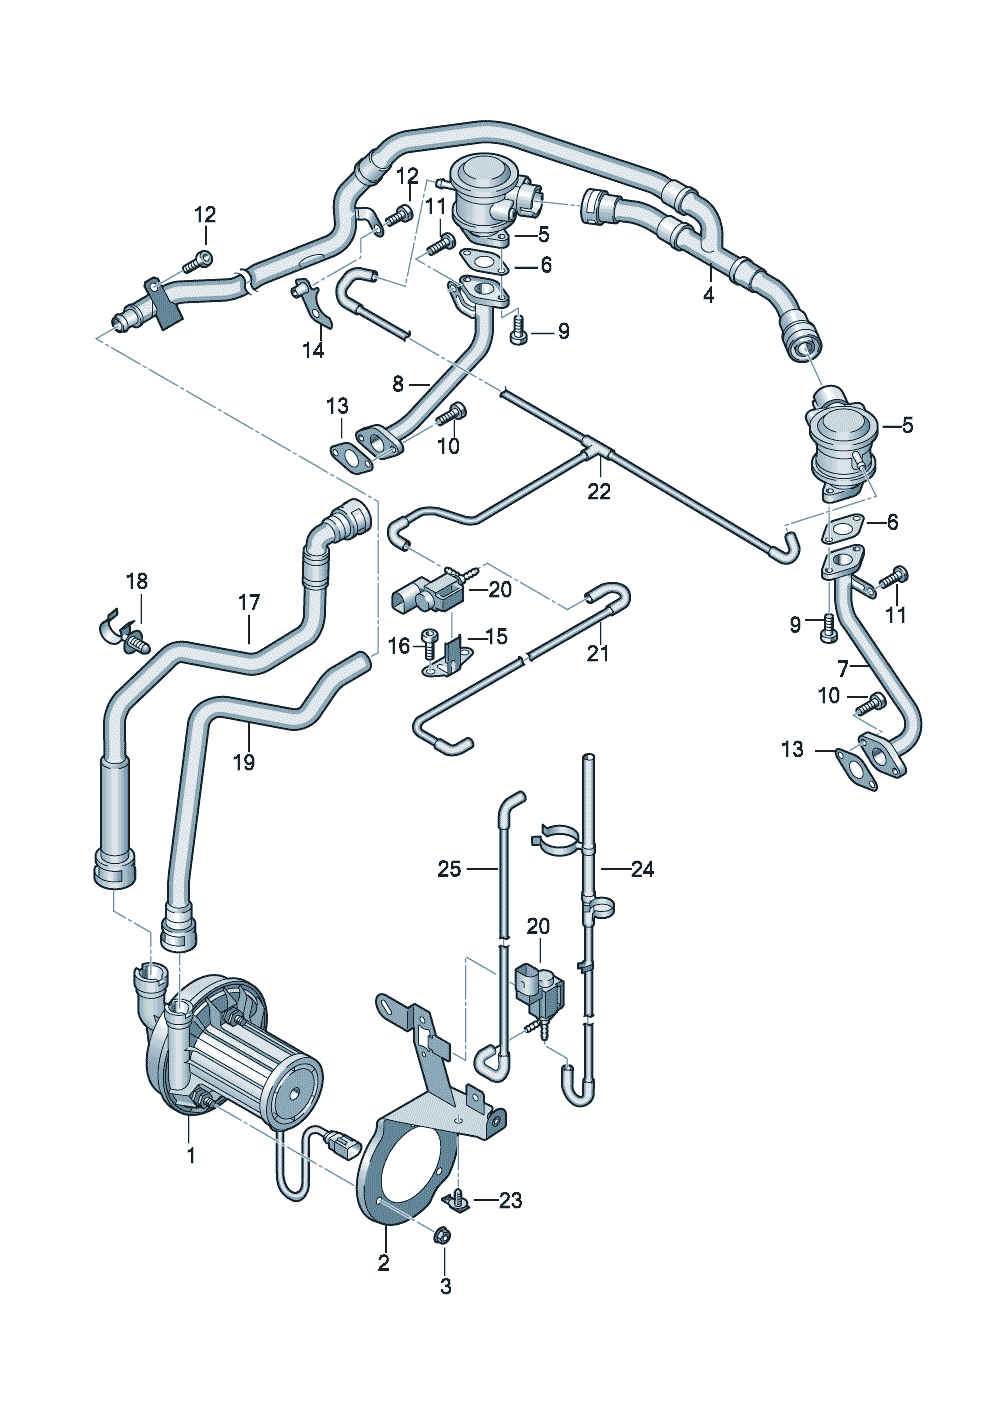 Secondary air pumpSecondary air valve 4.2 Ltr. - Audi RS4 Cabriolet qu. - rs4c